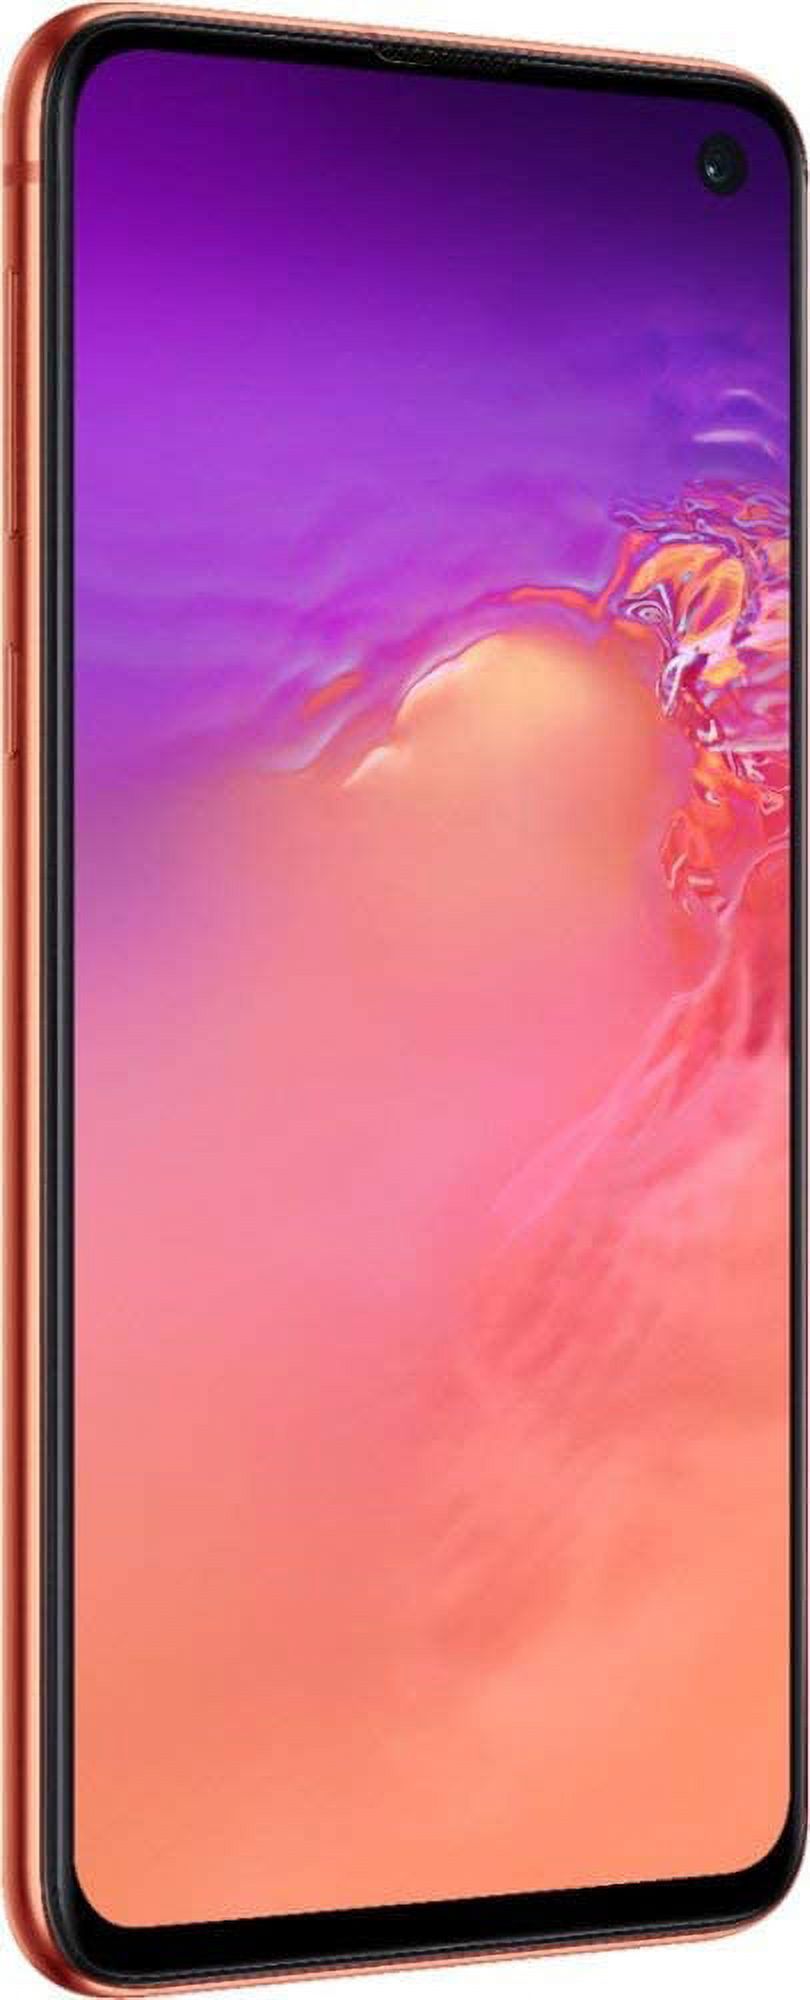 Restored Samsung Galaxy S10e SM-G970U 128GB AT&T Unlocked Smartphone - Flamingo Pink (Refurbished) - image 4 of 5